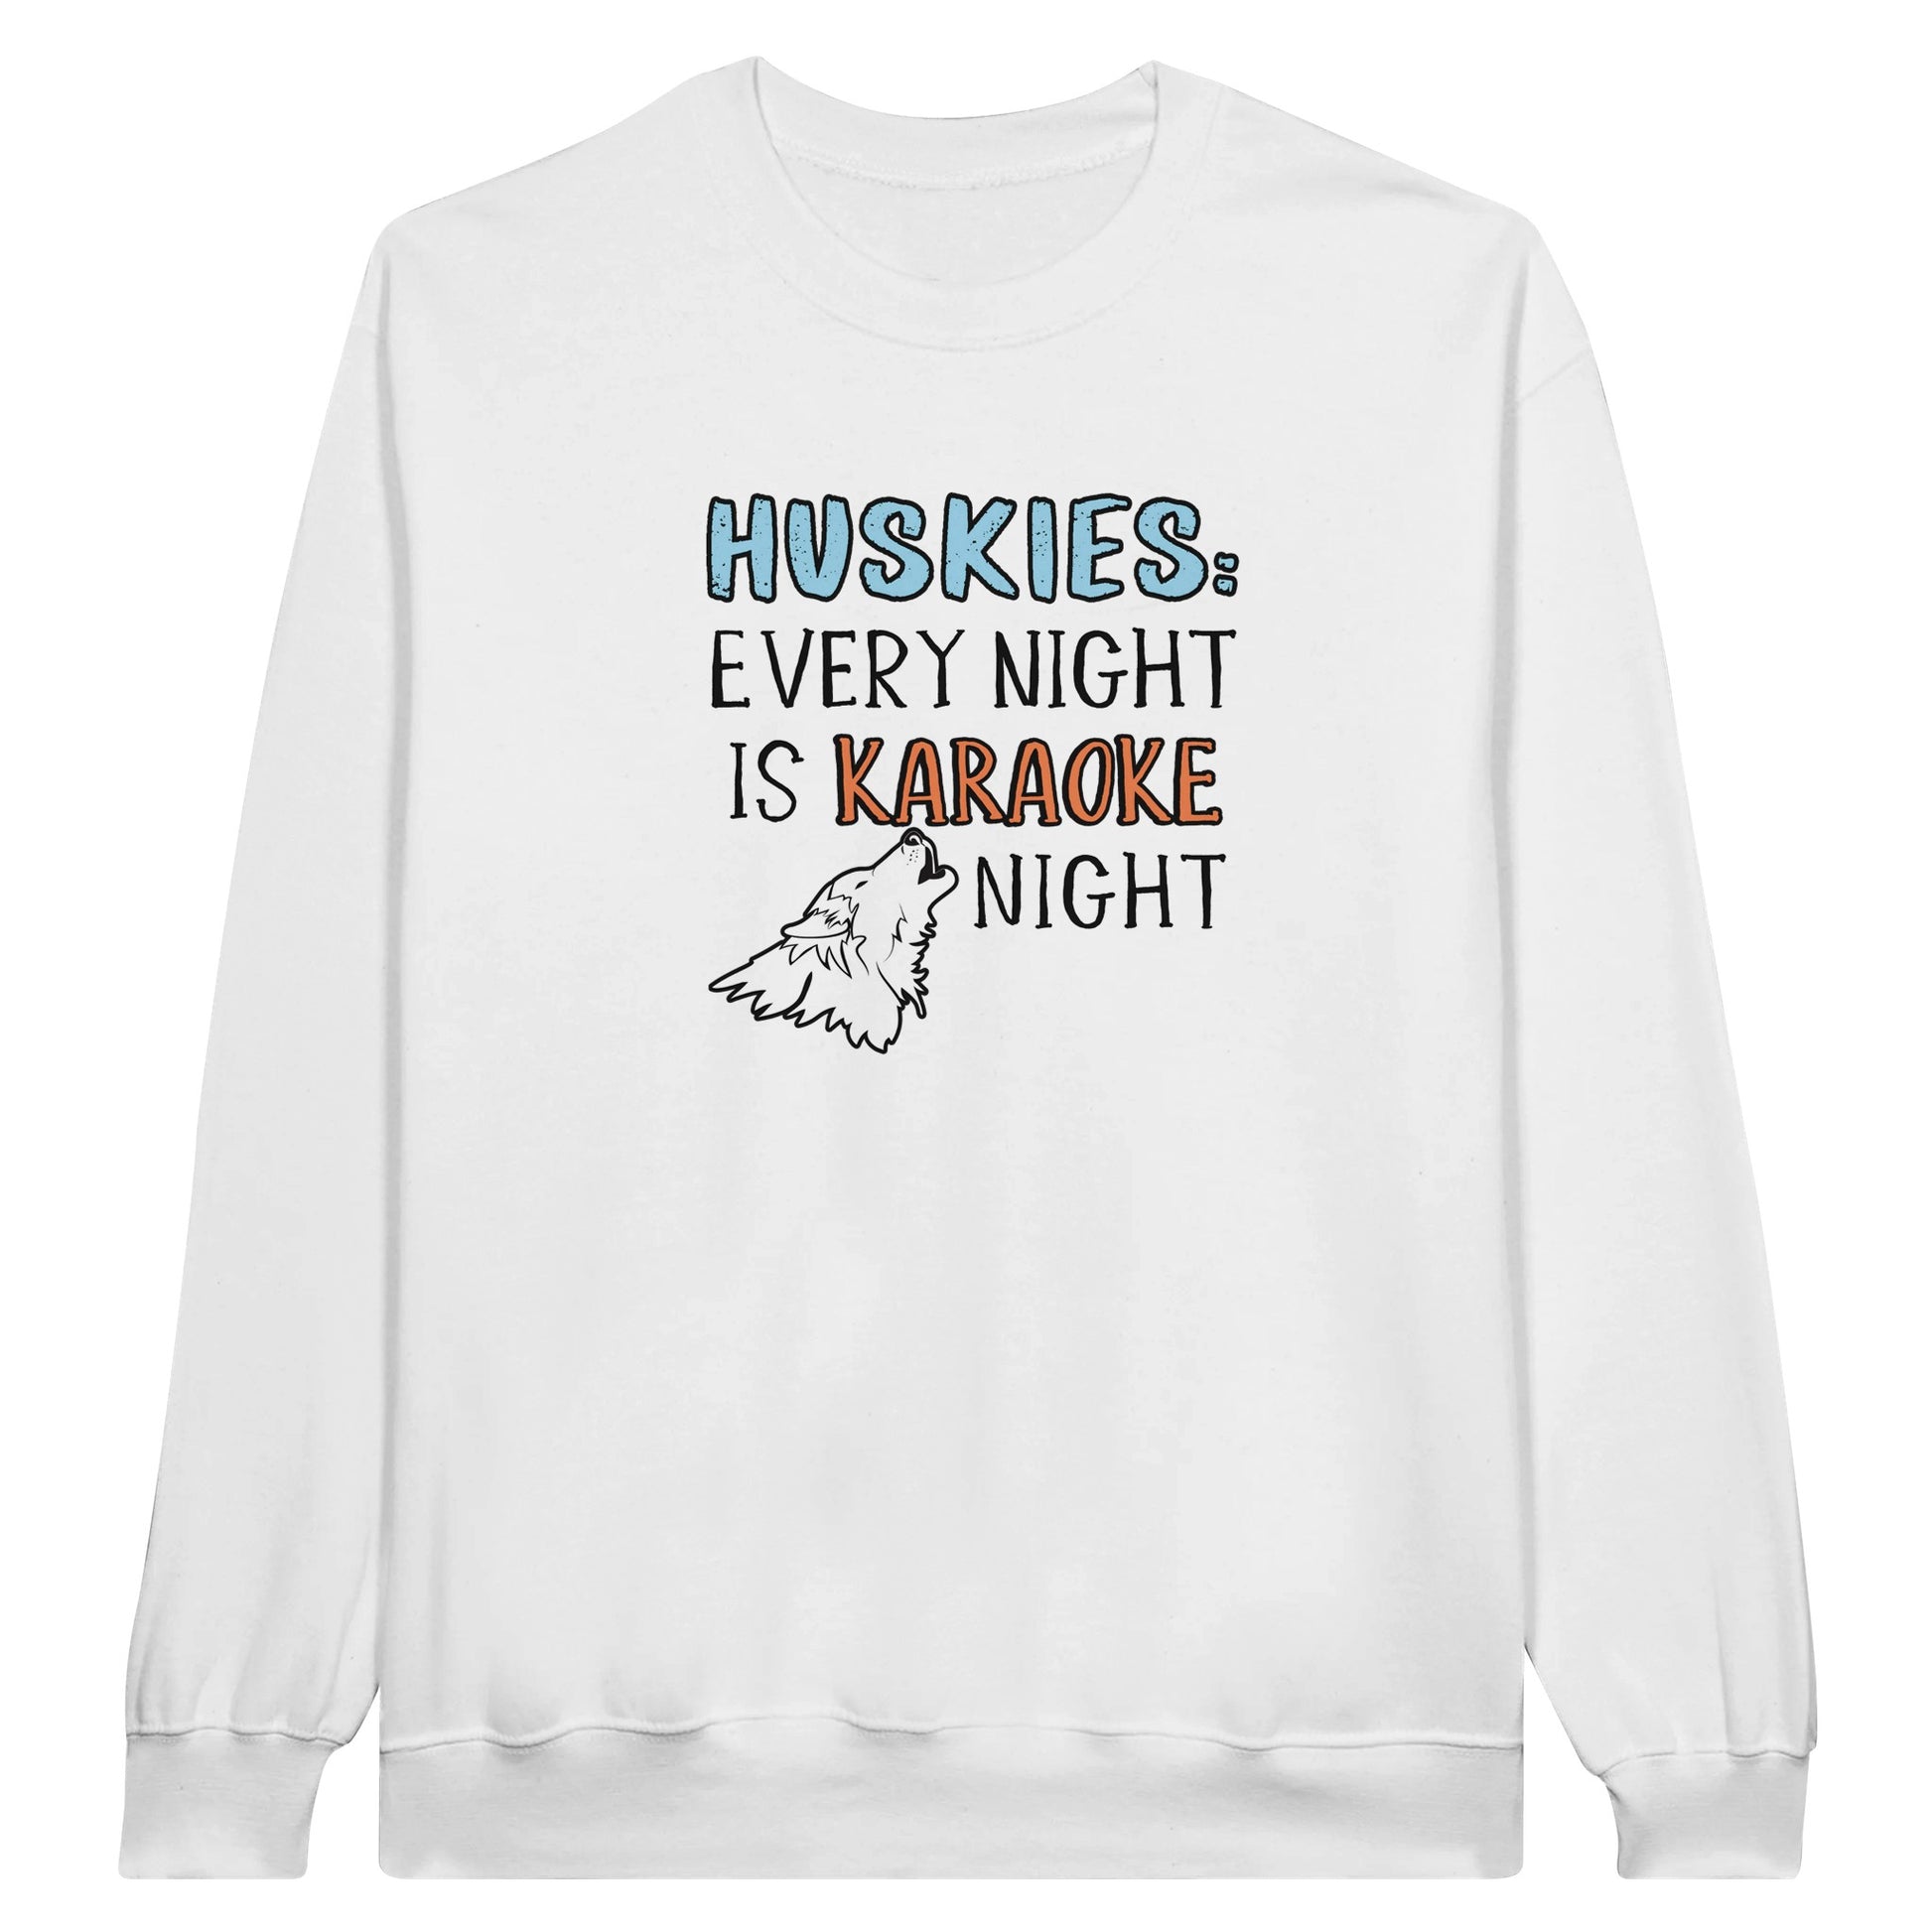 Unisex Sweatshirt with the design: "HUSKIES: Every Night Is Karaoke Night.". Color is white